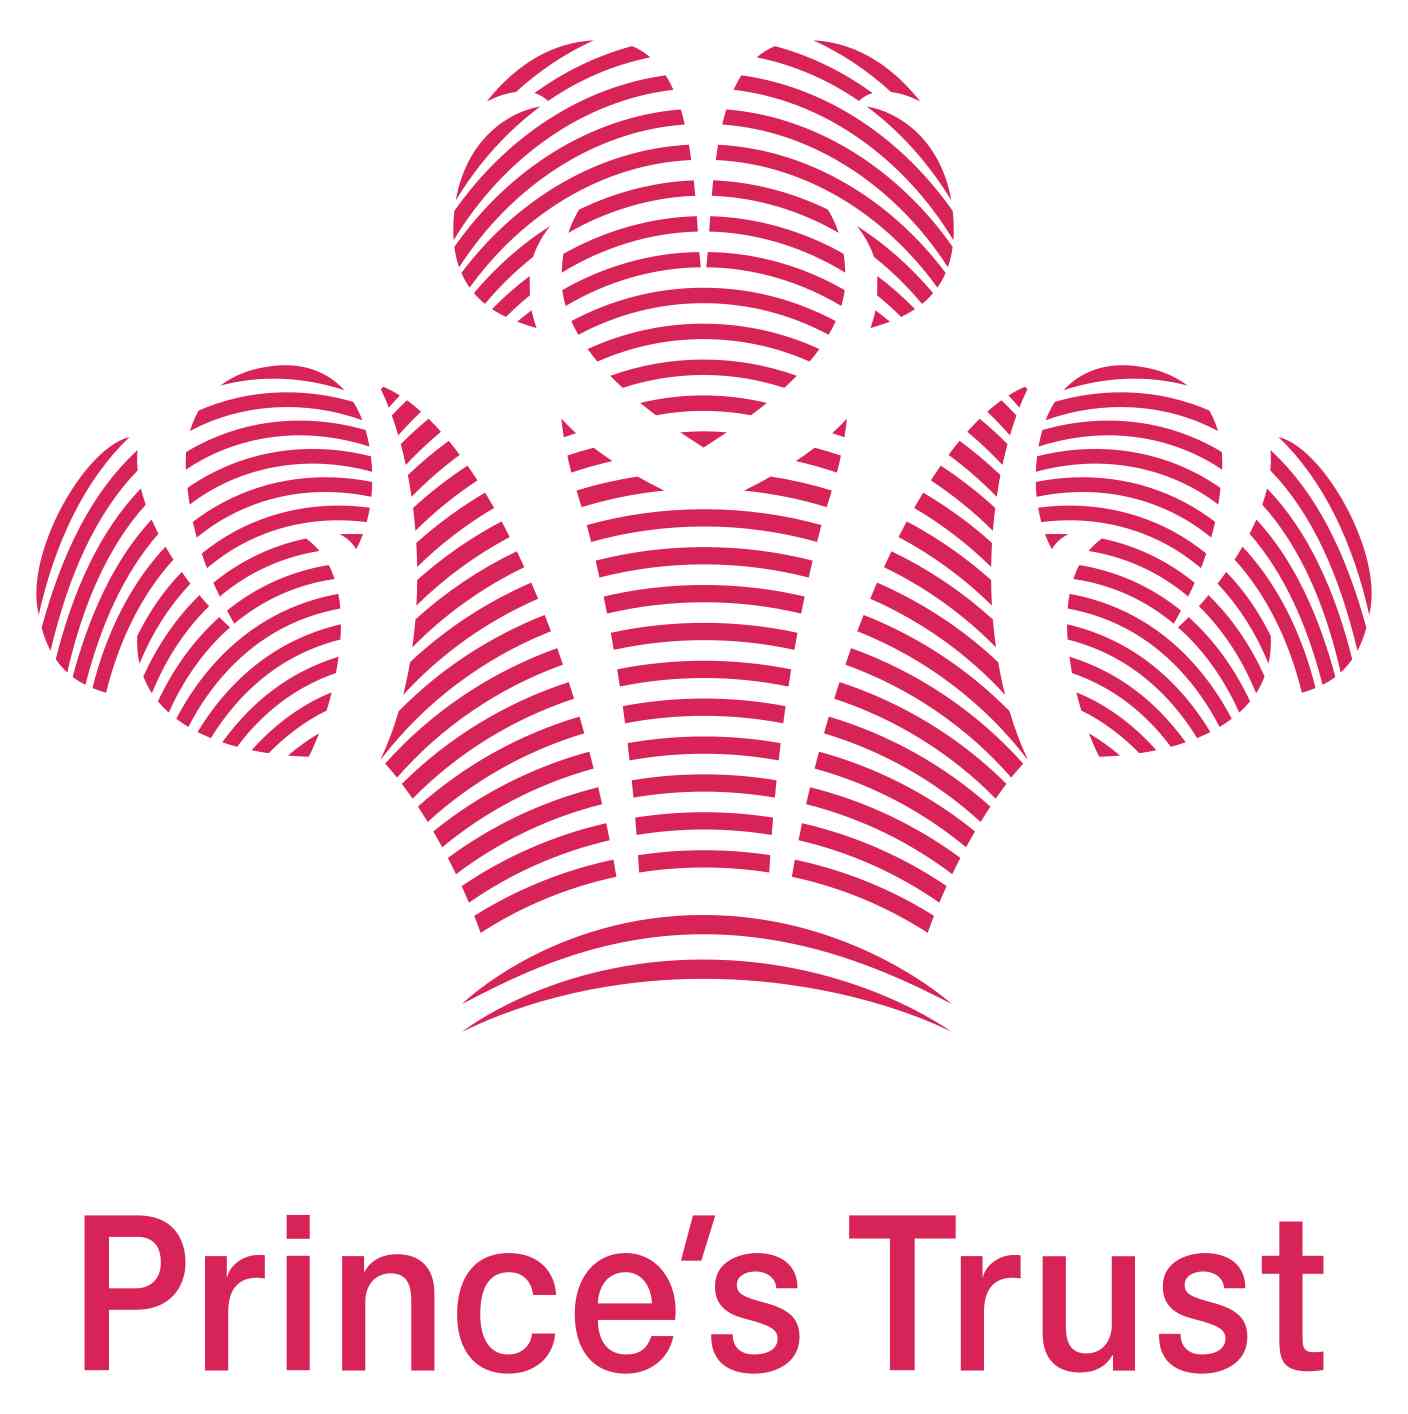 Prince's Trust logo.